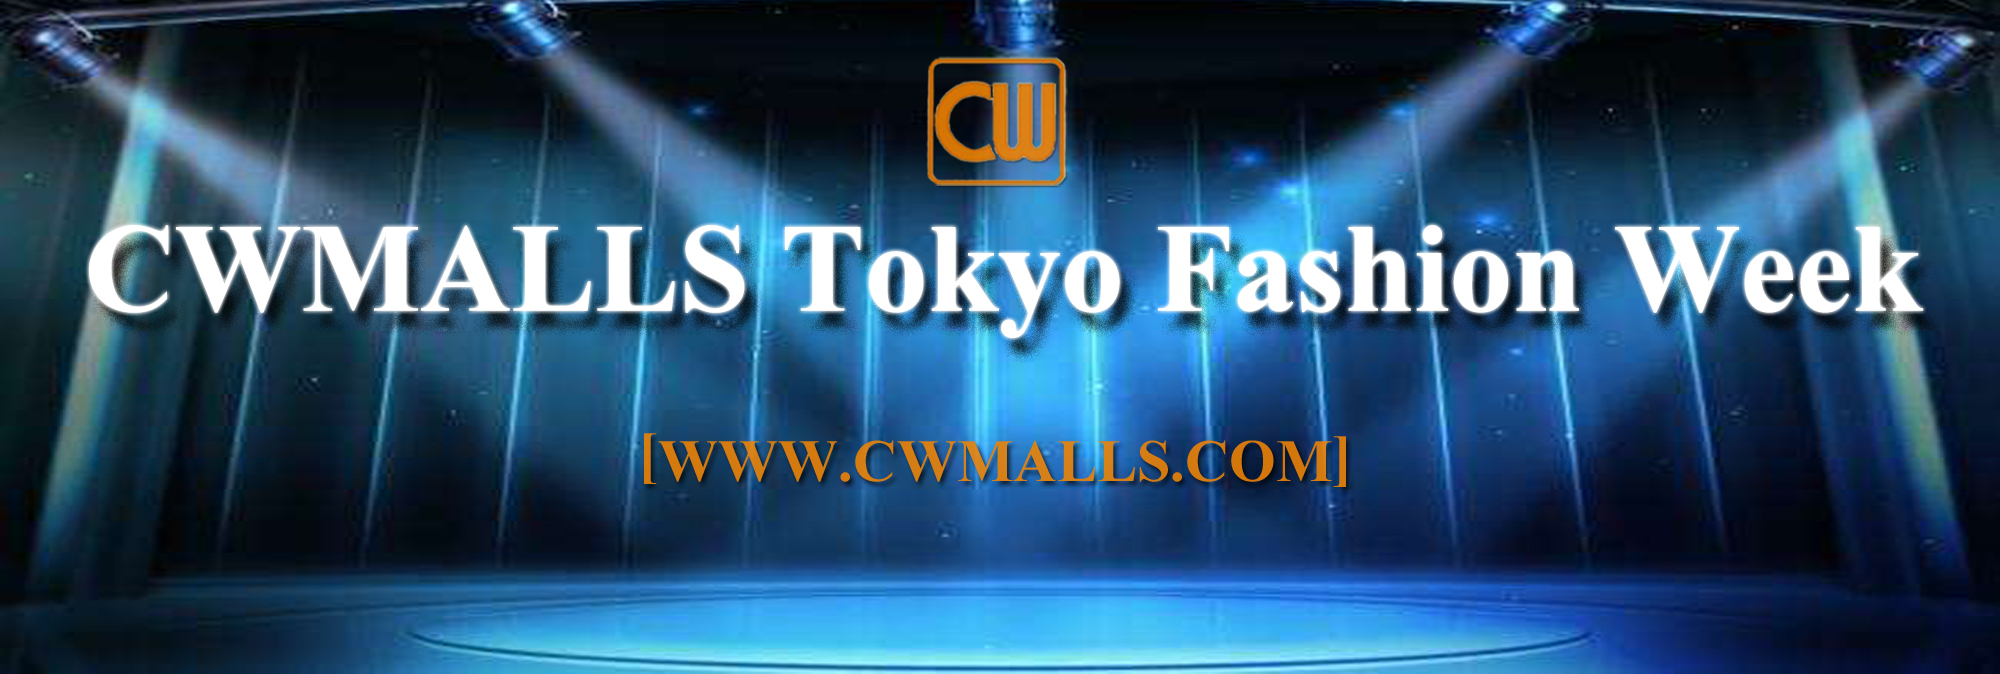 CWMALLS Tokyo Fashion Week